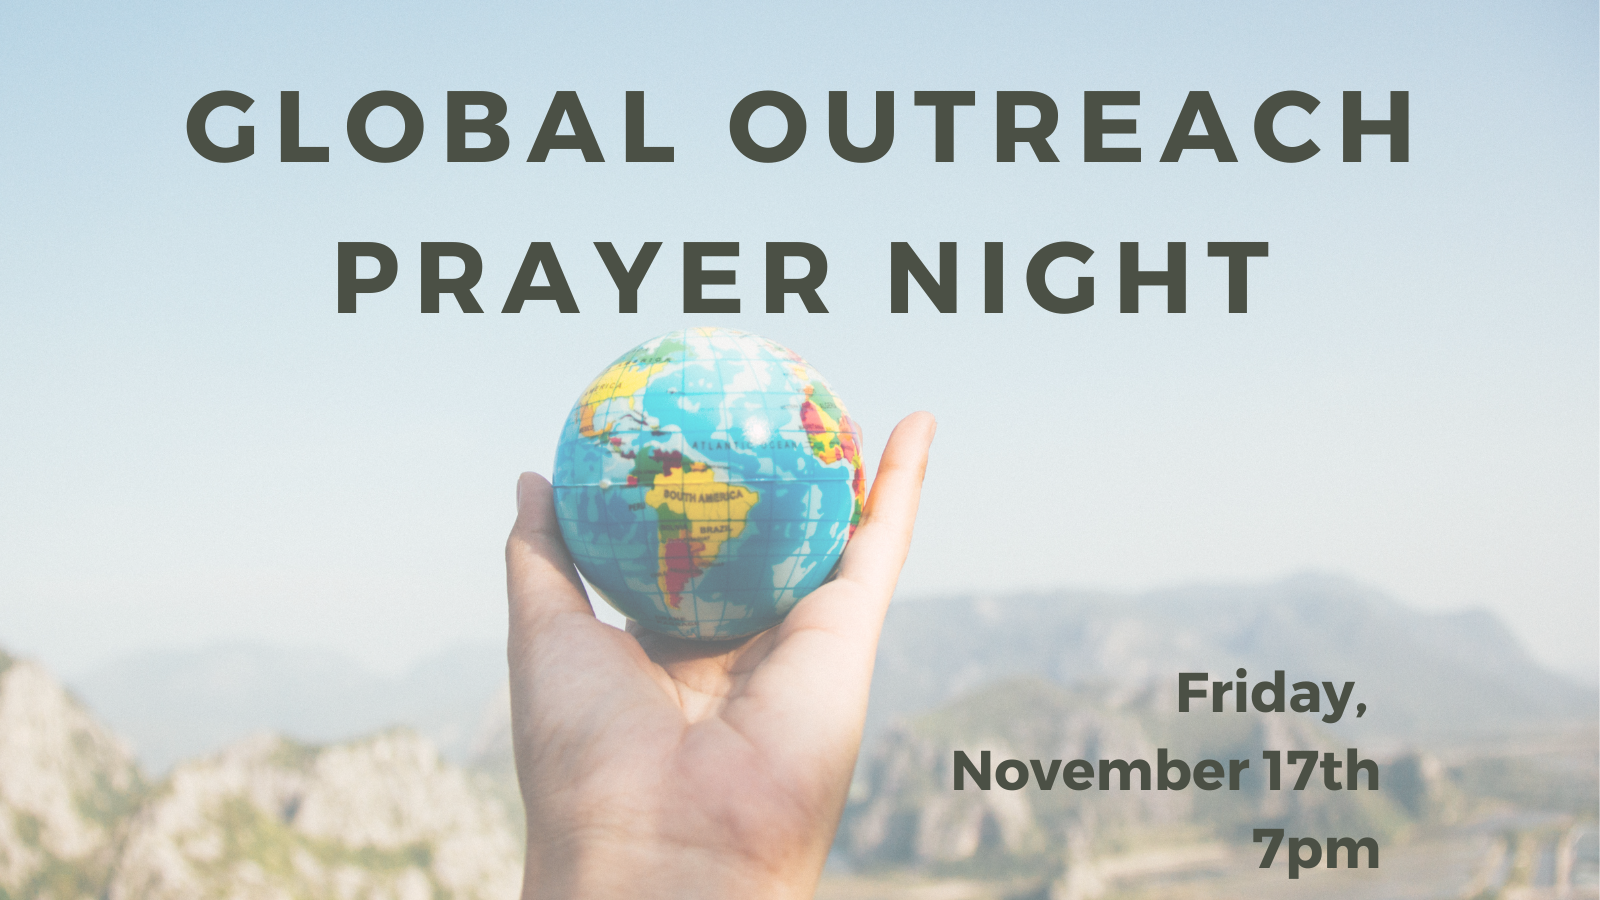 GO Team Prayer night 1117   (1600 x 900 px) image